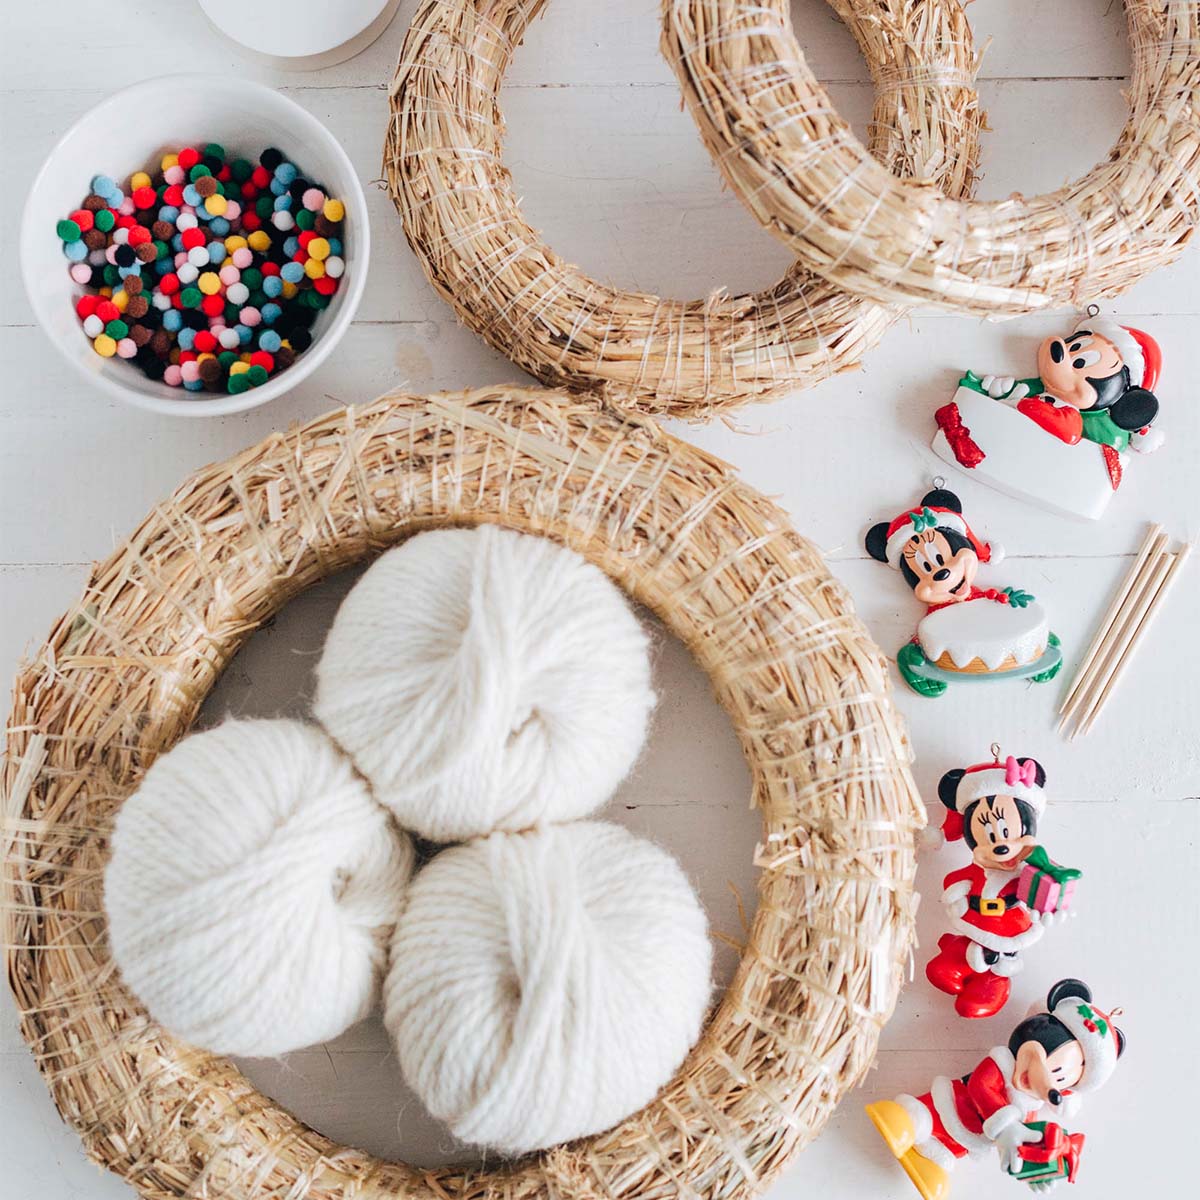 DIY: Disney kerstkrans maken benodigdheden